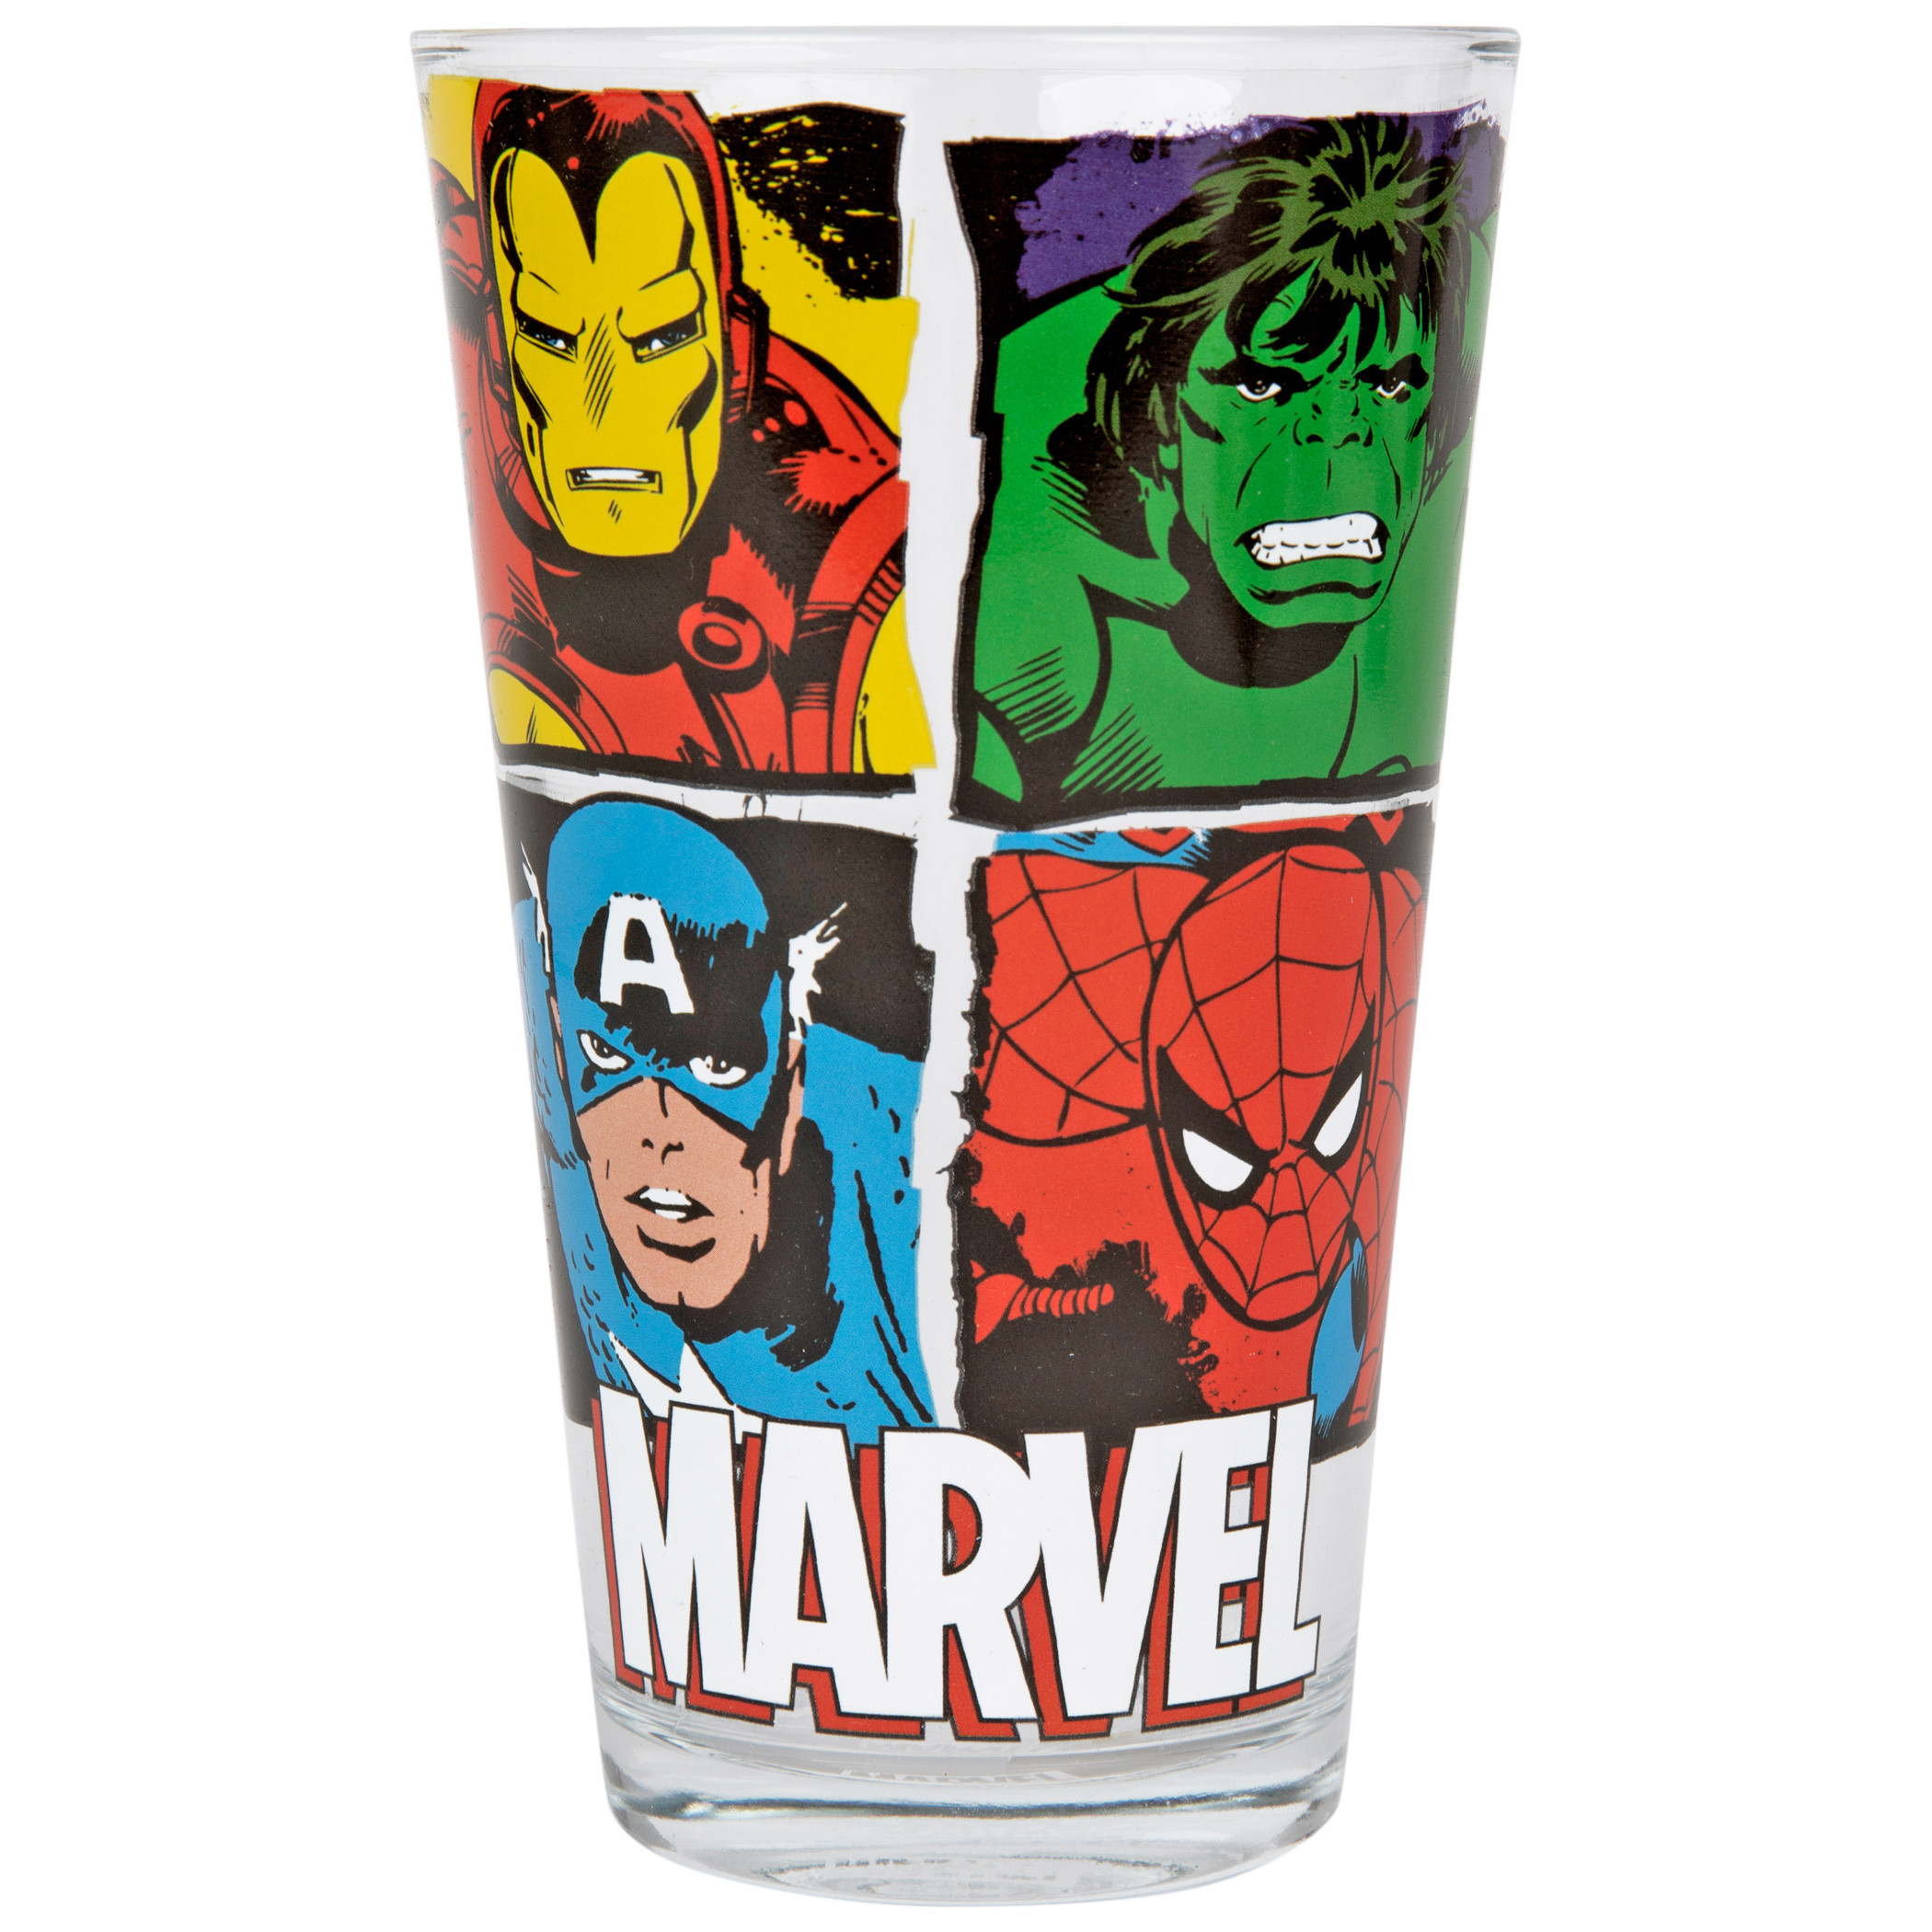 Avengers Marvel Comics Classic Retro-Styled Four Heroes Pub Glass